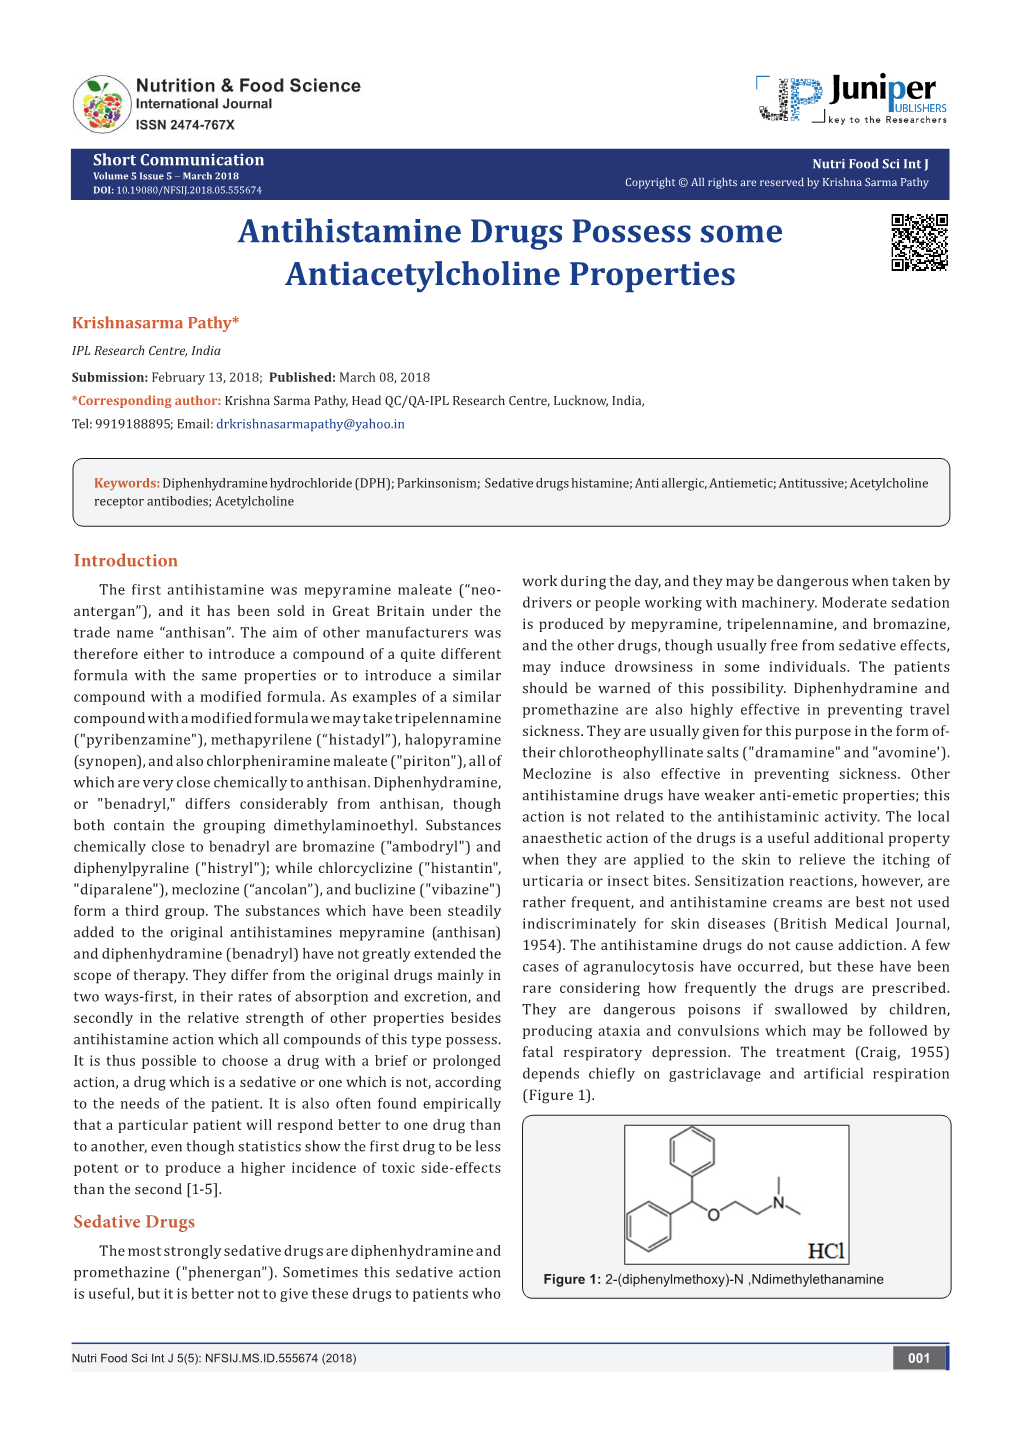 Antihistamine Drugs Possess Some Antiacetylcholine Properties